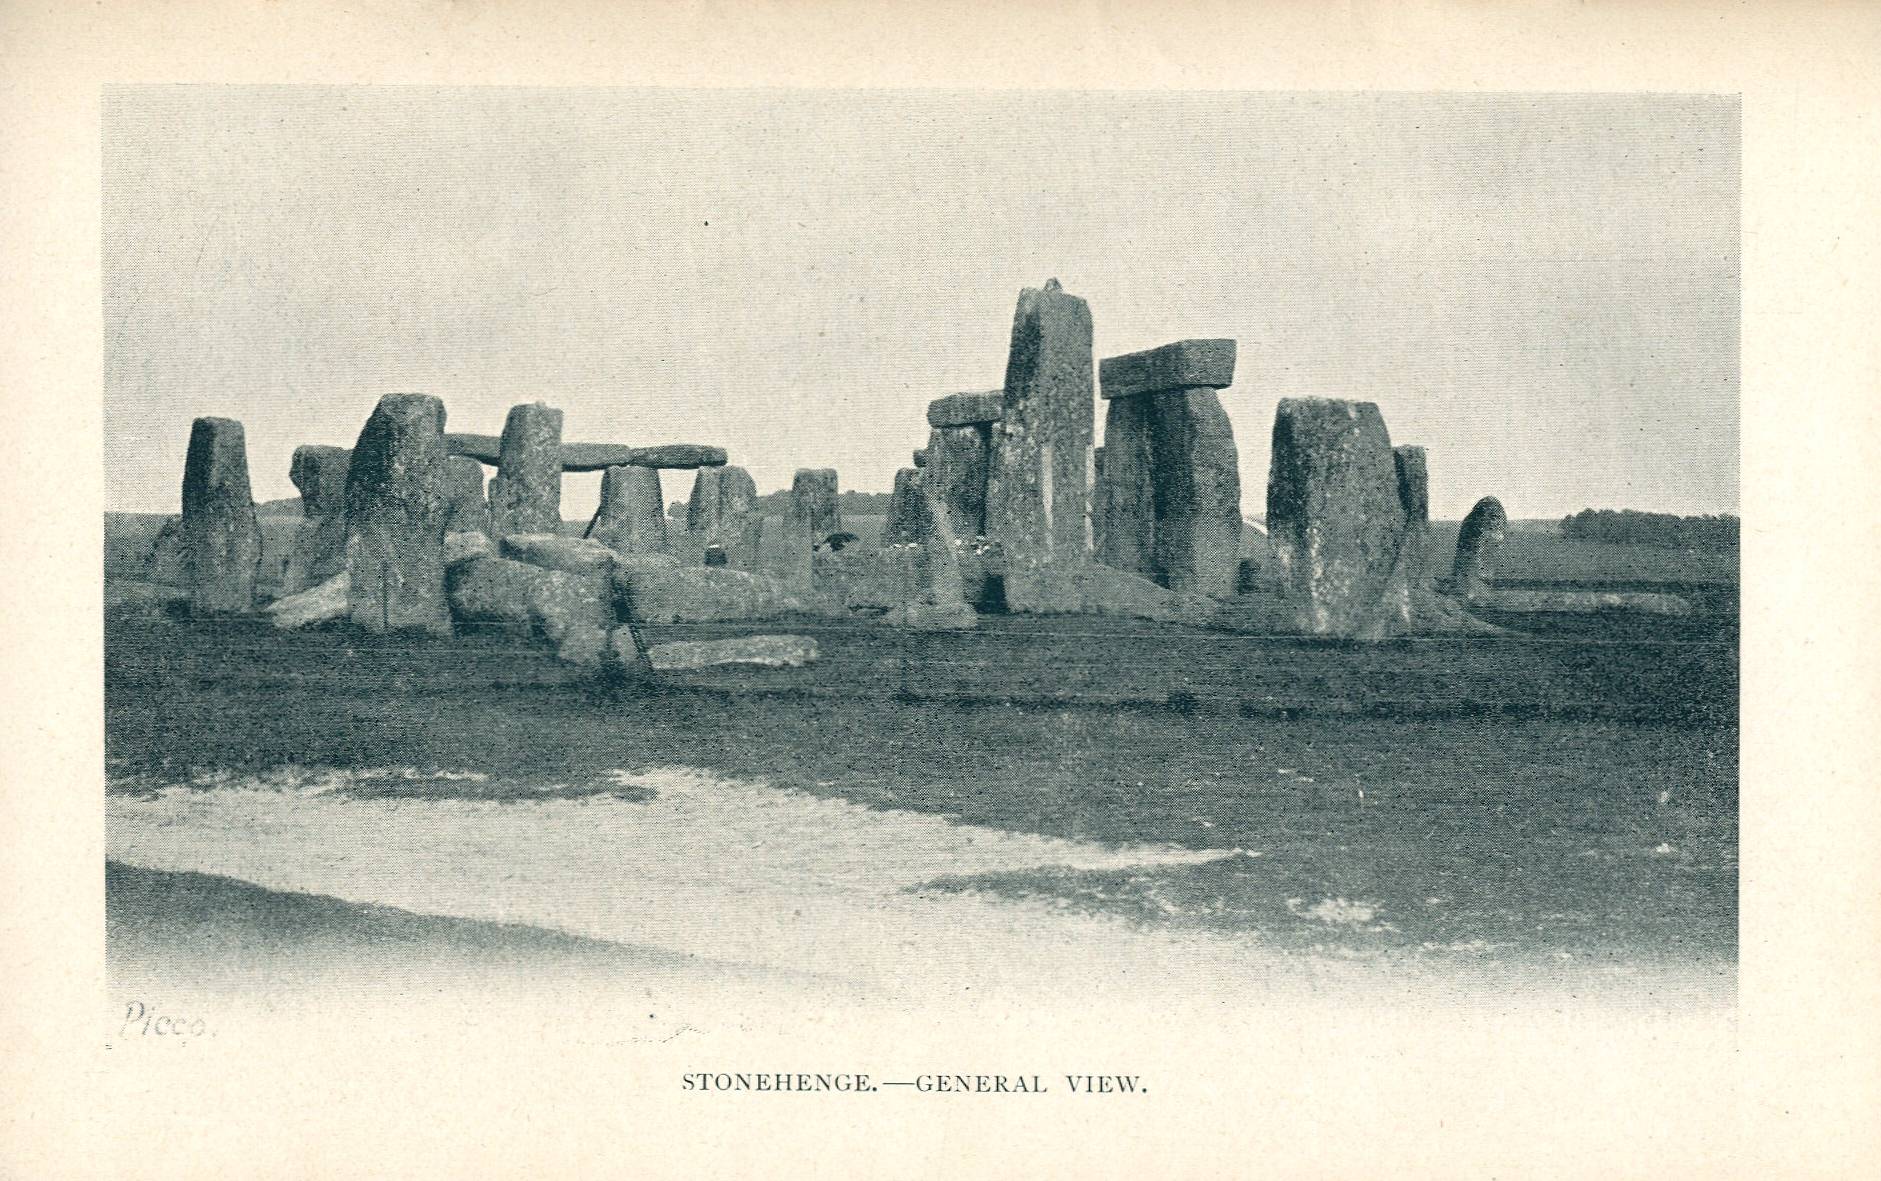 Stonehenge - General View